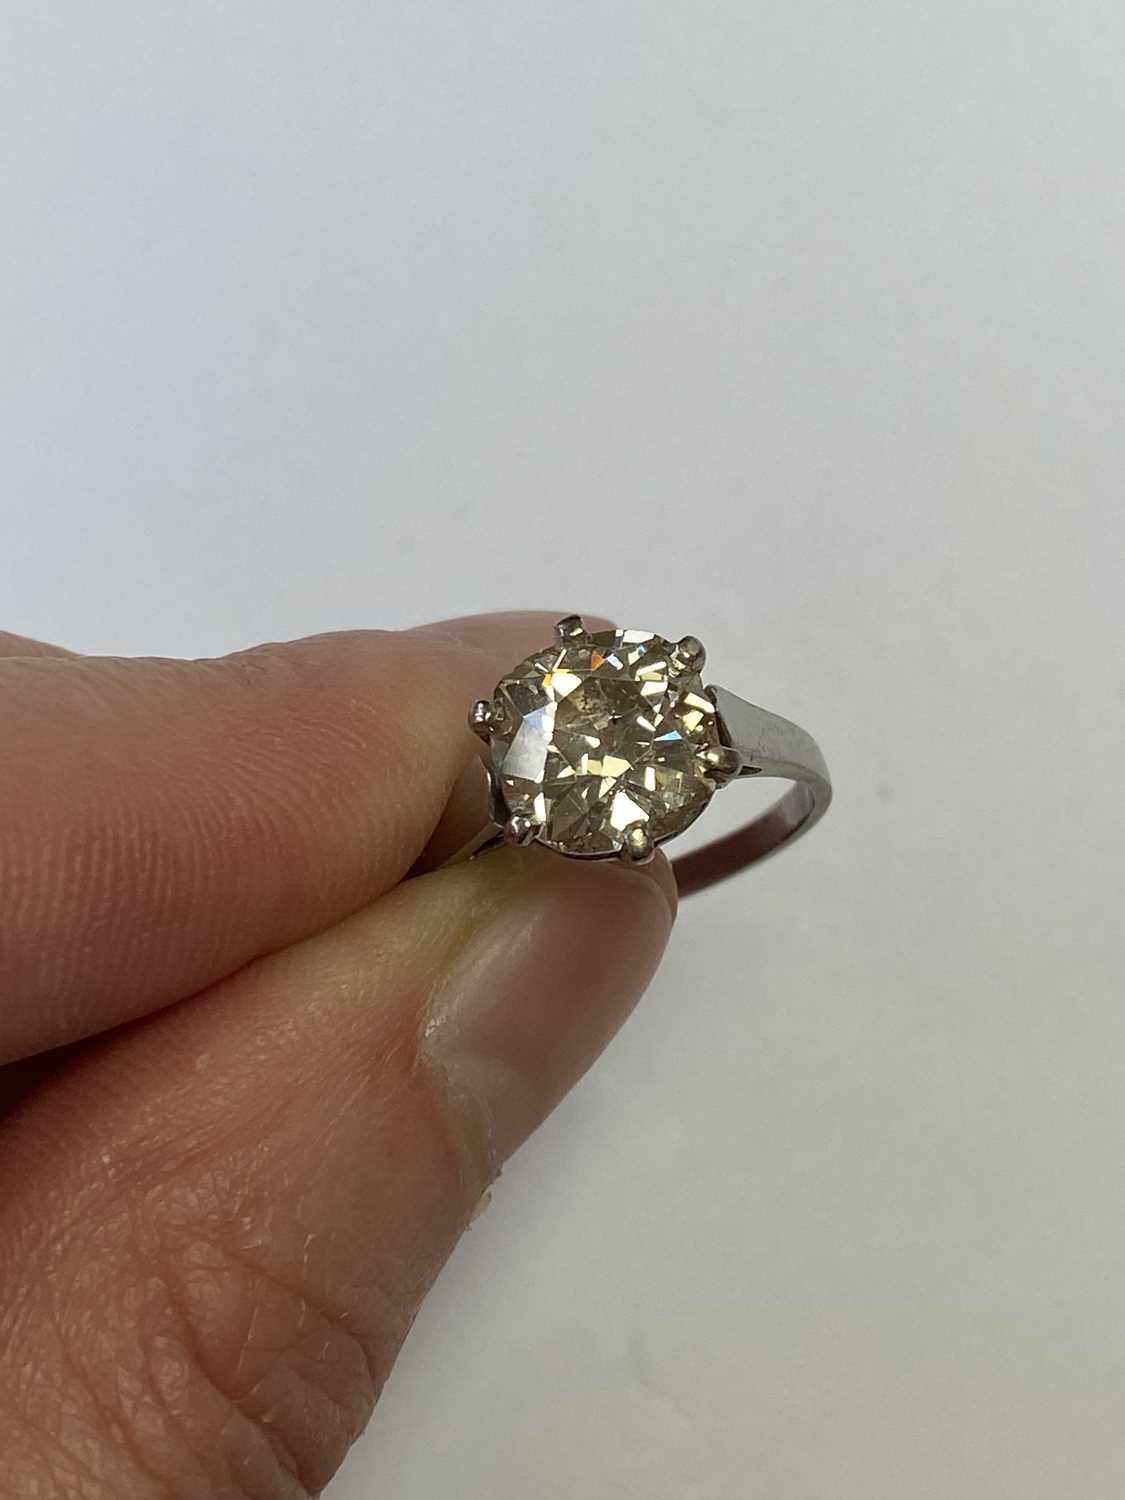 An early 20th century single stone diamond ring - Image 12 of 14